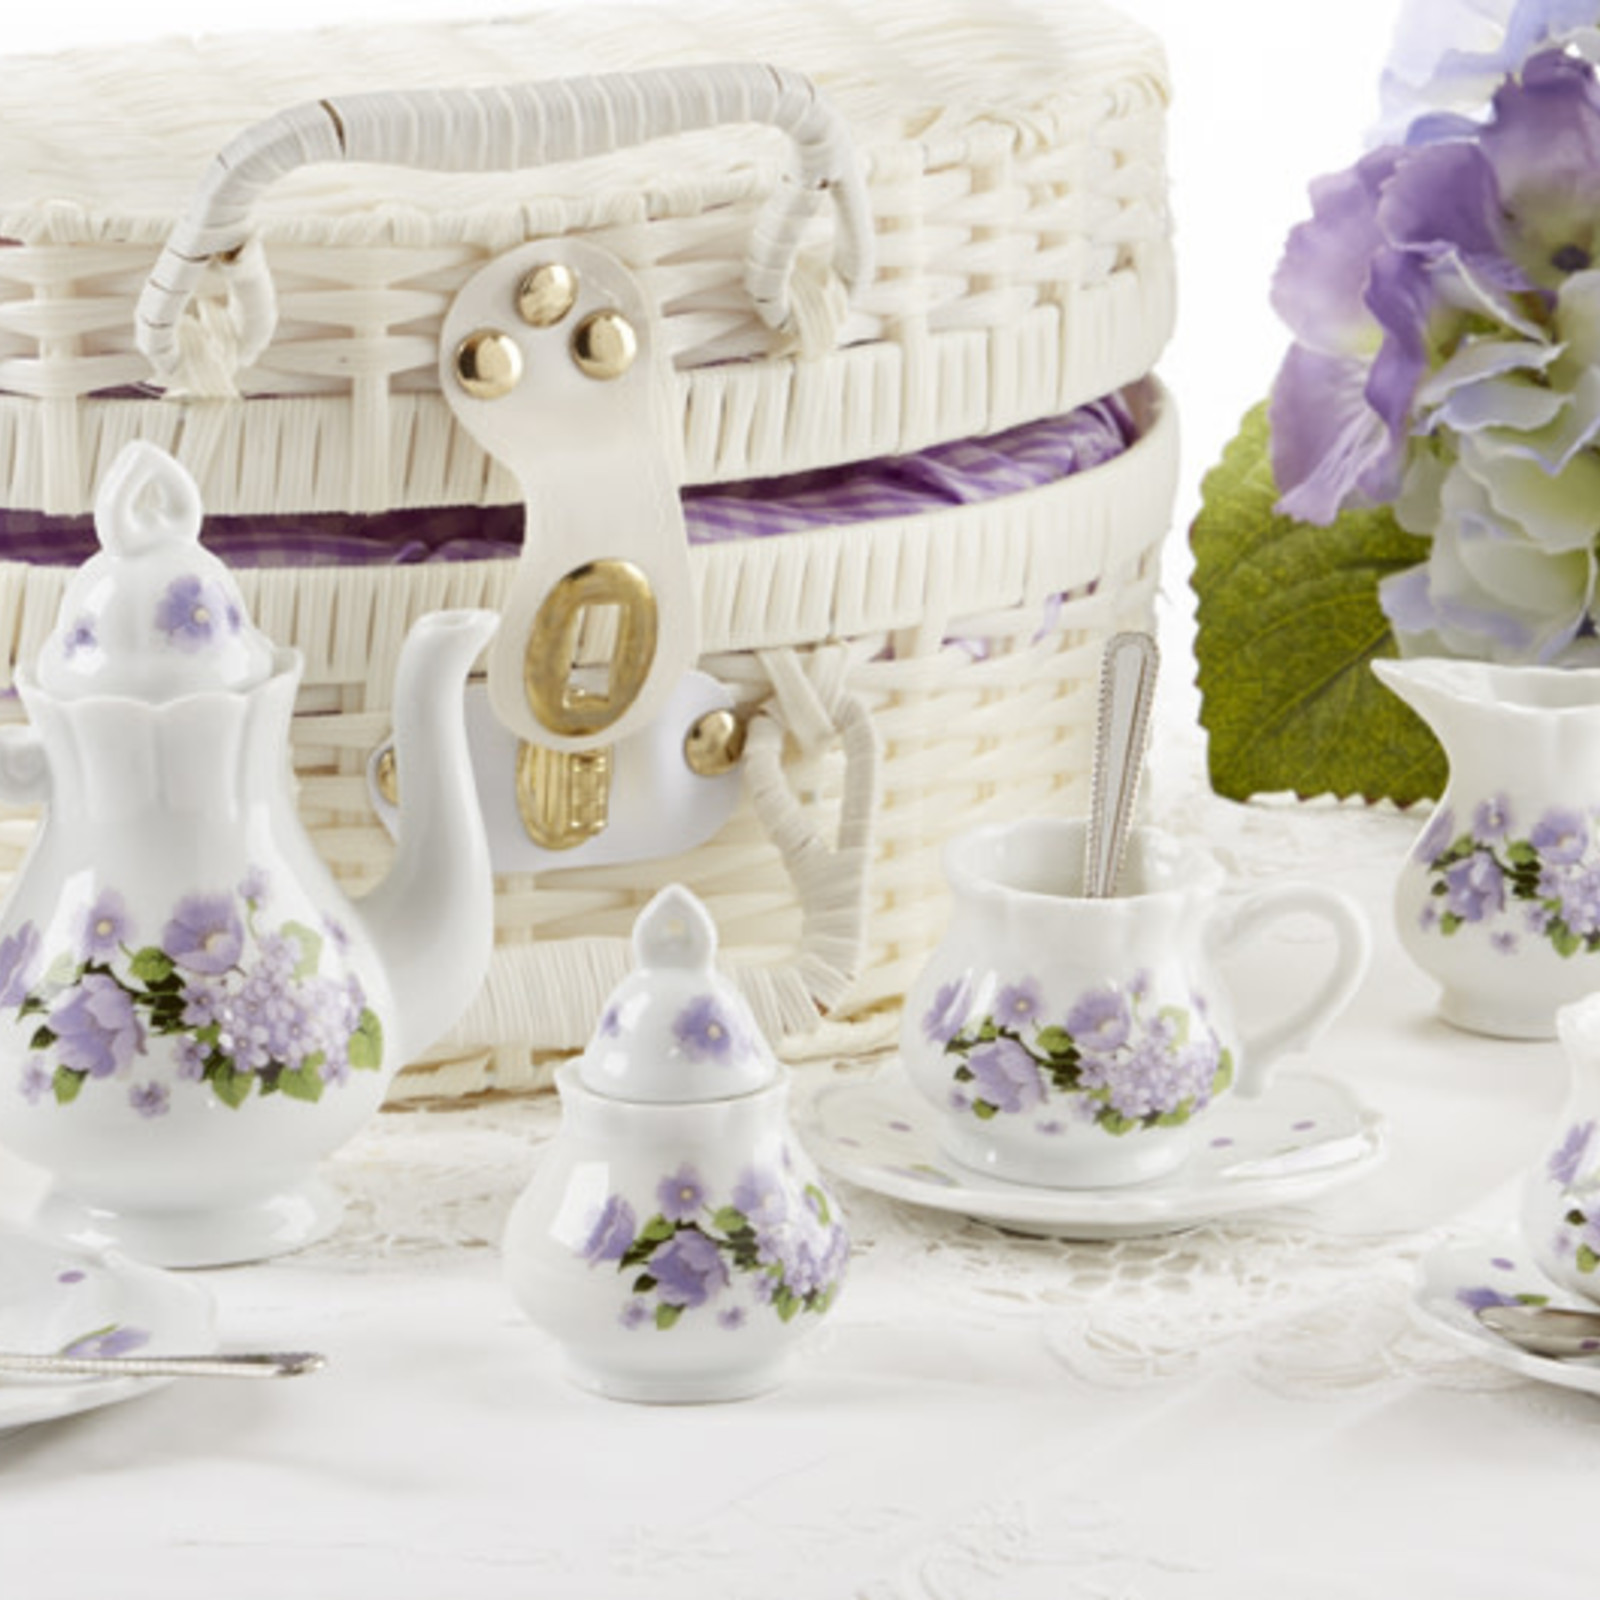 Delton Products Porcelain Tea Set in Basket, Purple Glory  8116-7 loading=